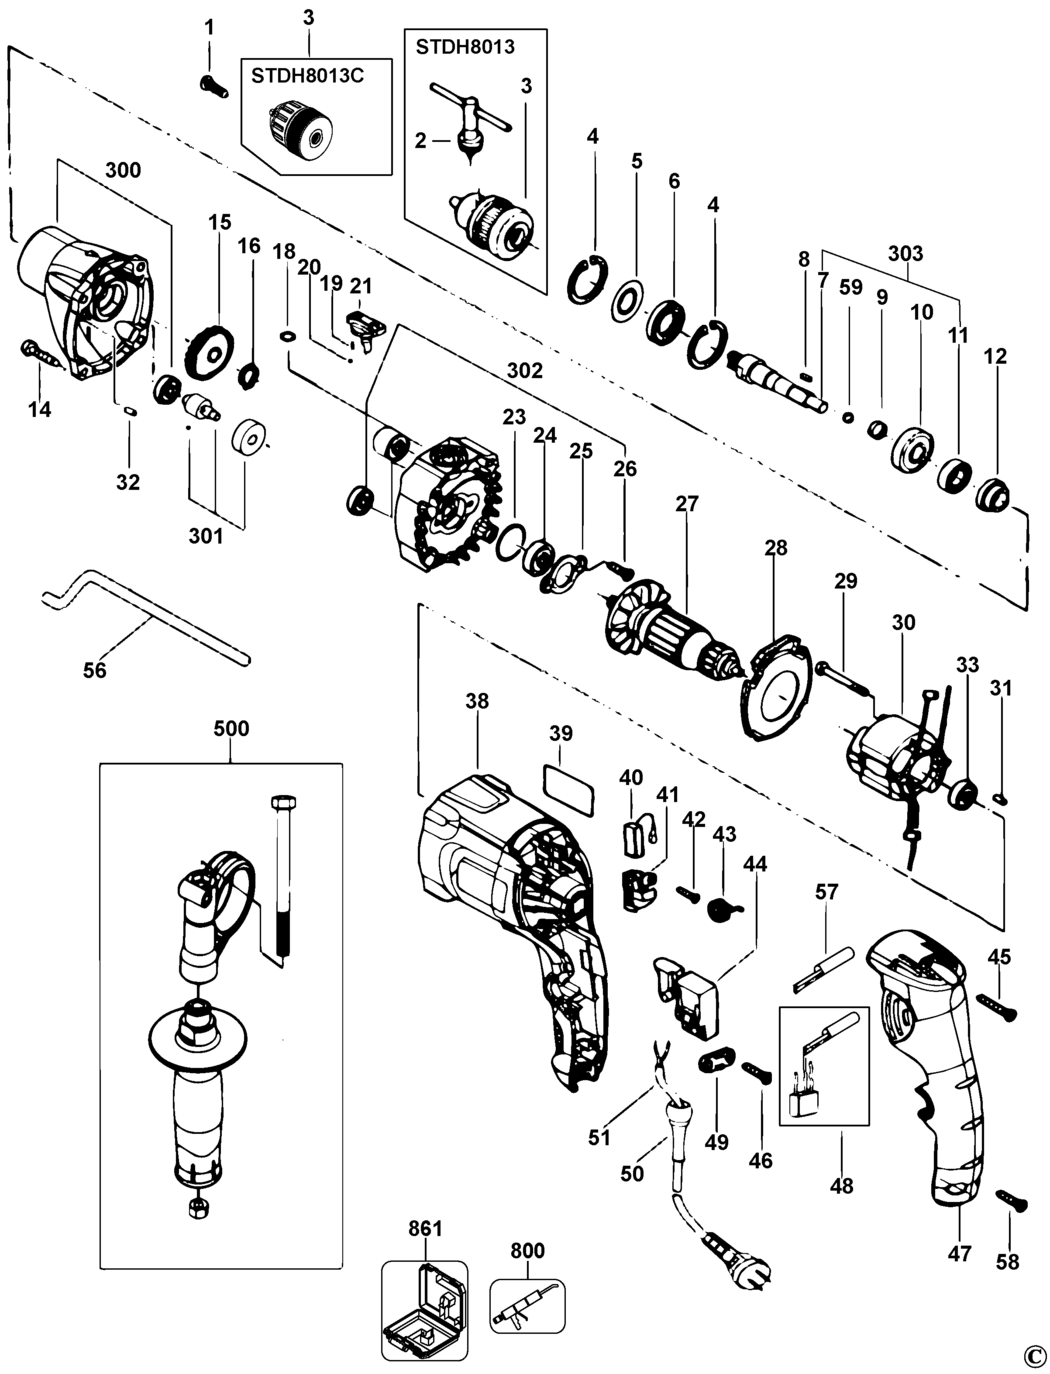 Stanley STDH8013 Type 1 Hammer Drill Spare Parts